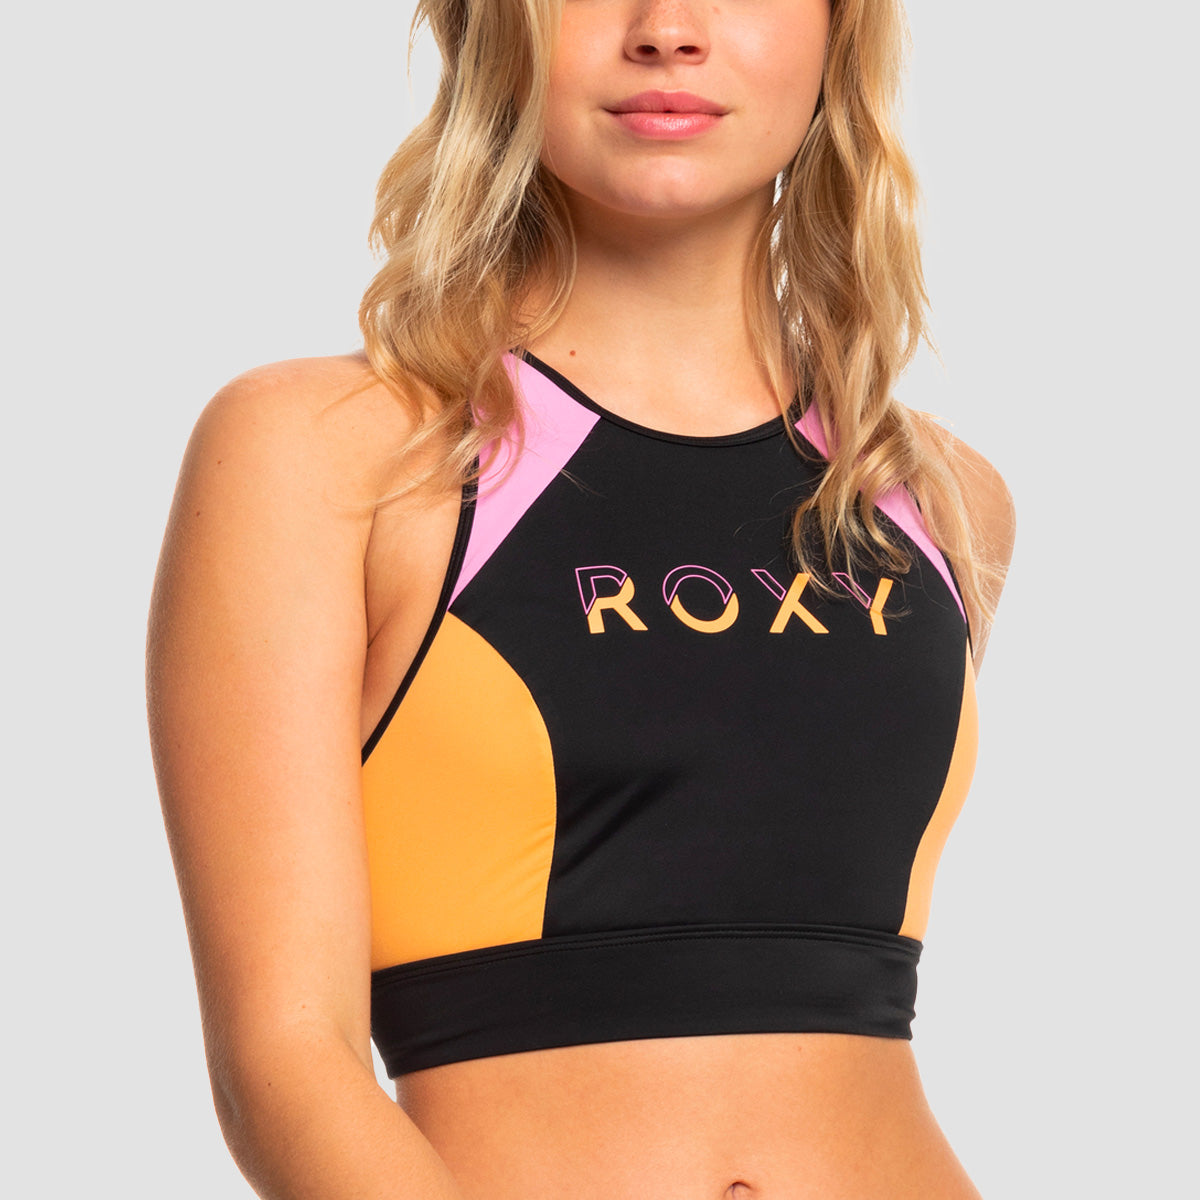 ROXY Fitness - Bra Bikini Top for Women